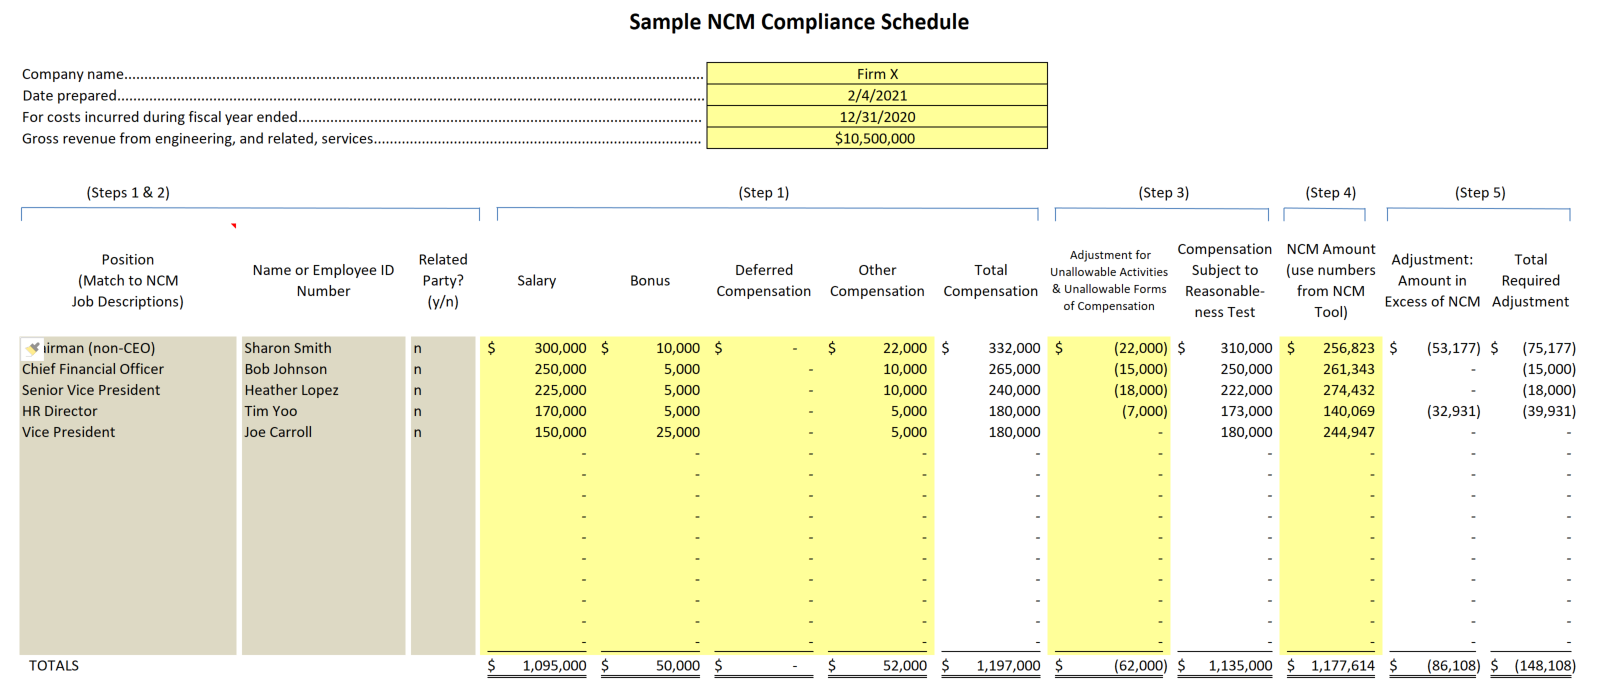 Sample NCM Compliance Schedule